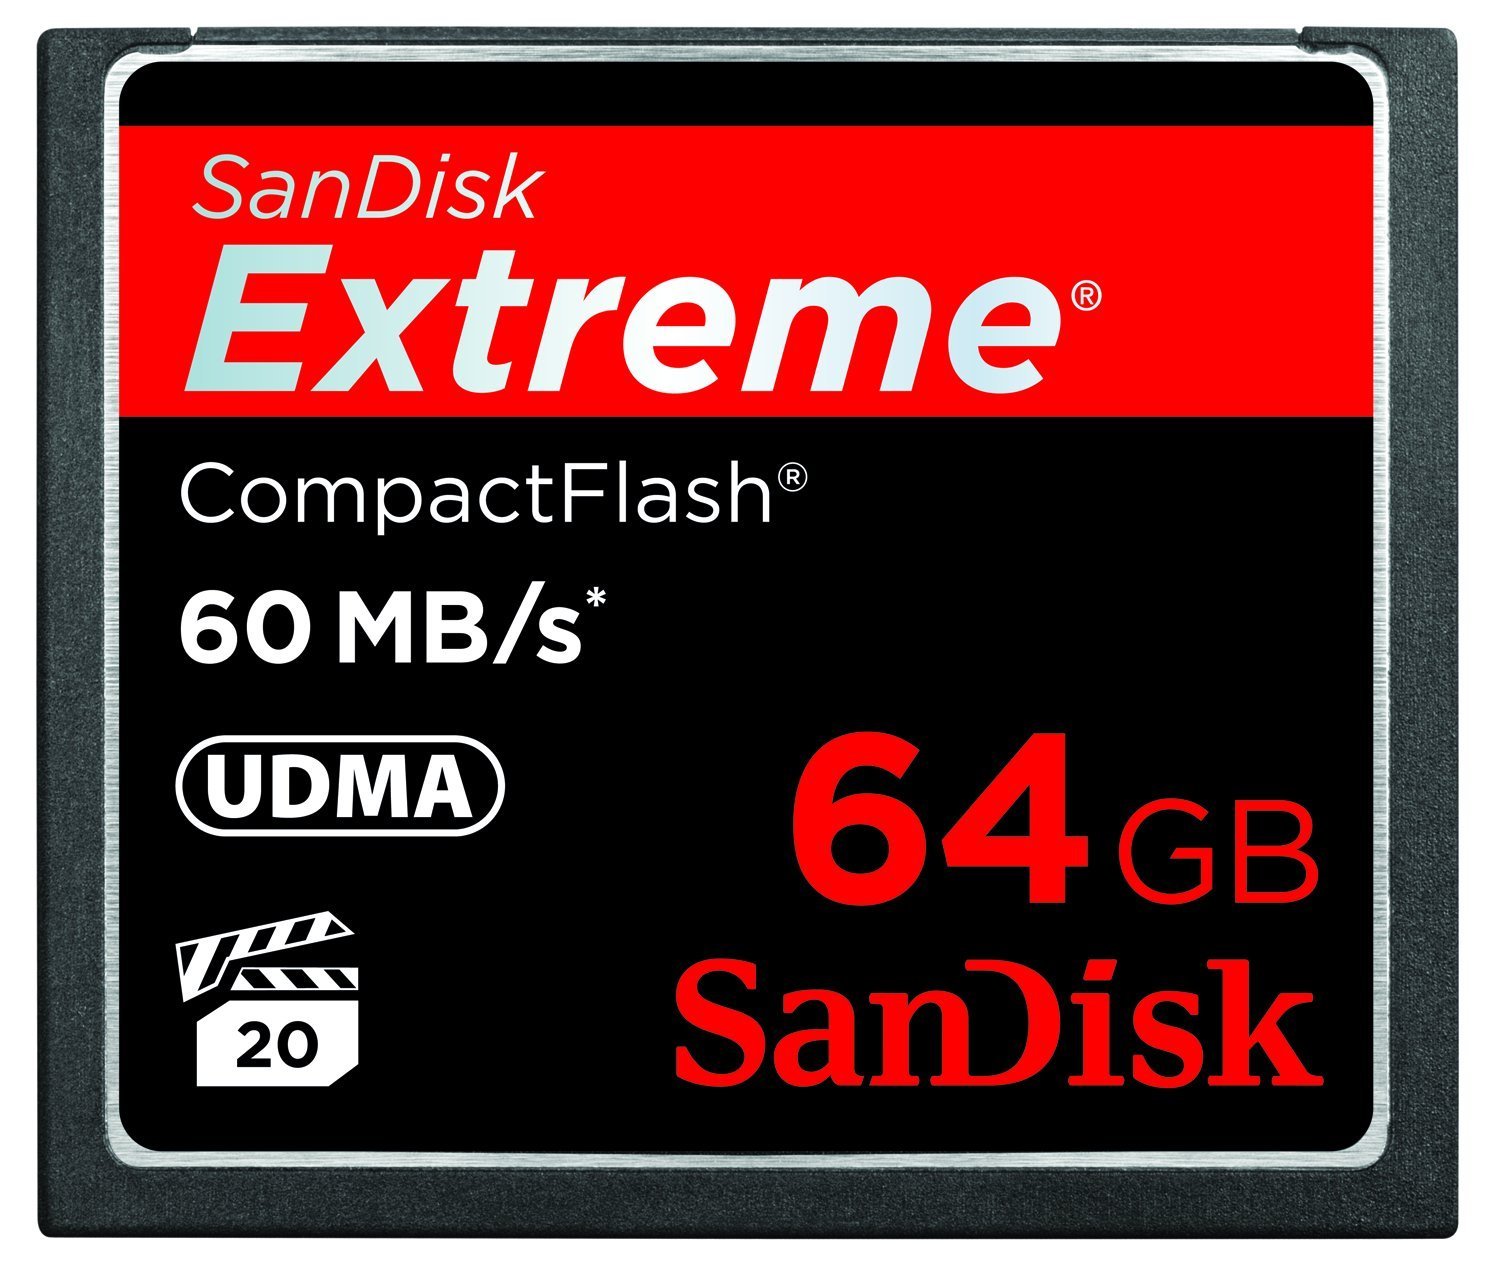 SanDisk Extreme CompactFlash 64 GB mémoire carte 60MO/s SDCFX -